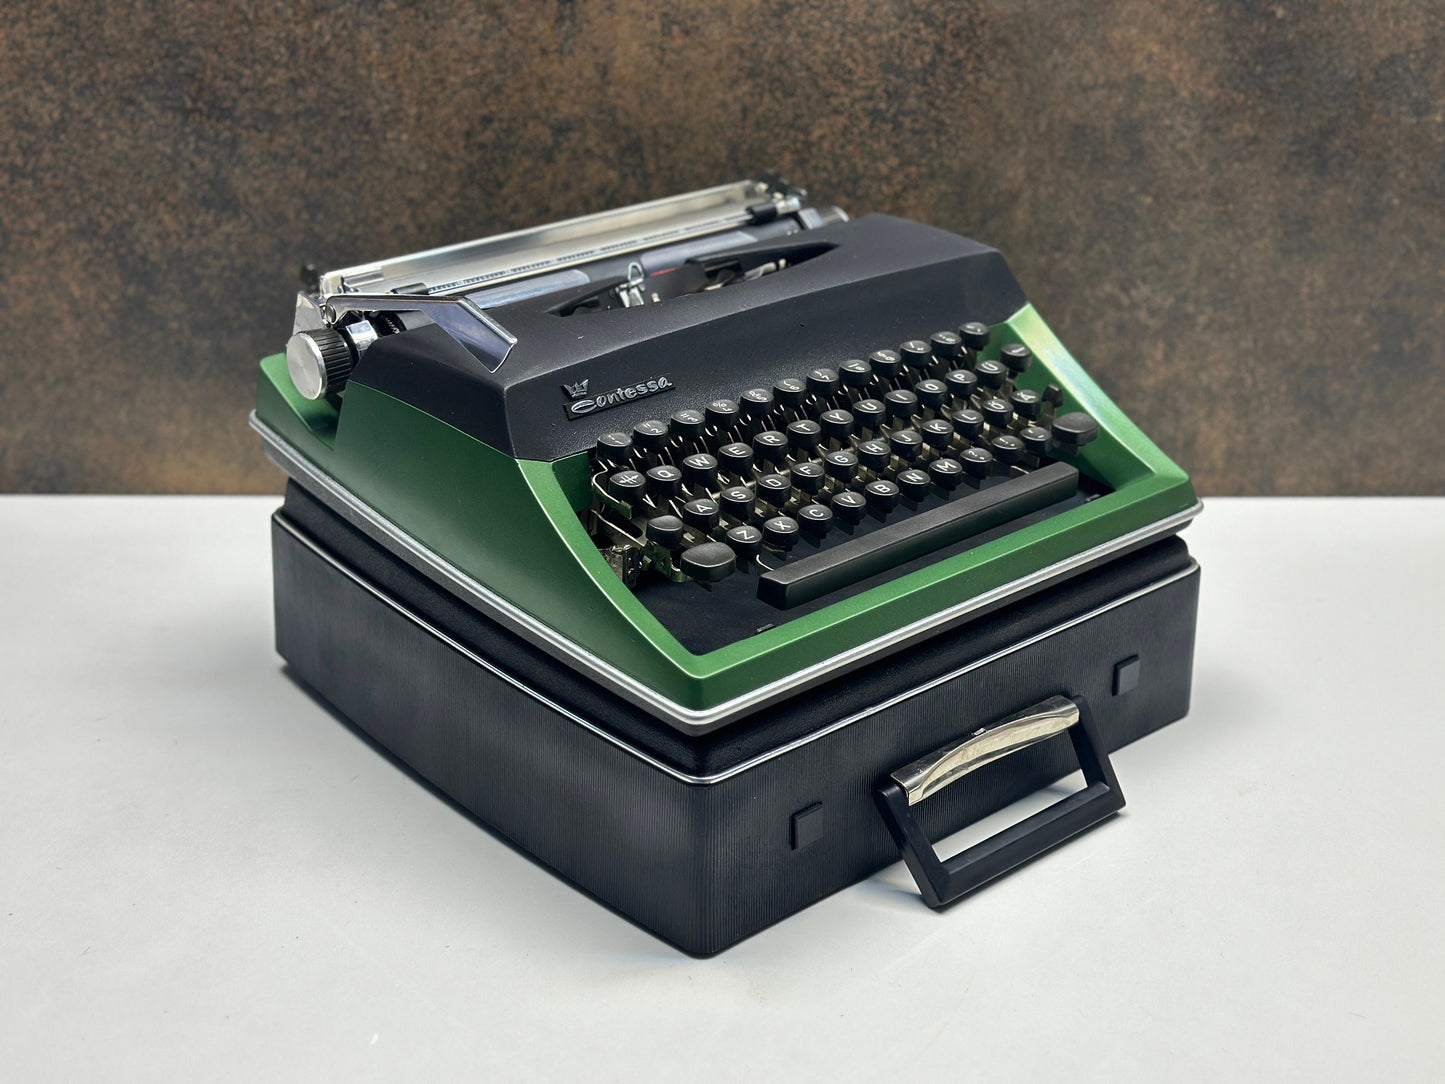 Qwerty Typewriter -  Adler Contessa Typewriter -  Classic and Reliable Writing Tool - Retro Style / Premium Green Typewriter